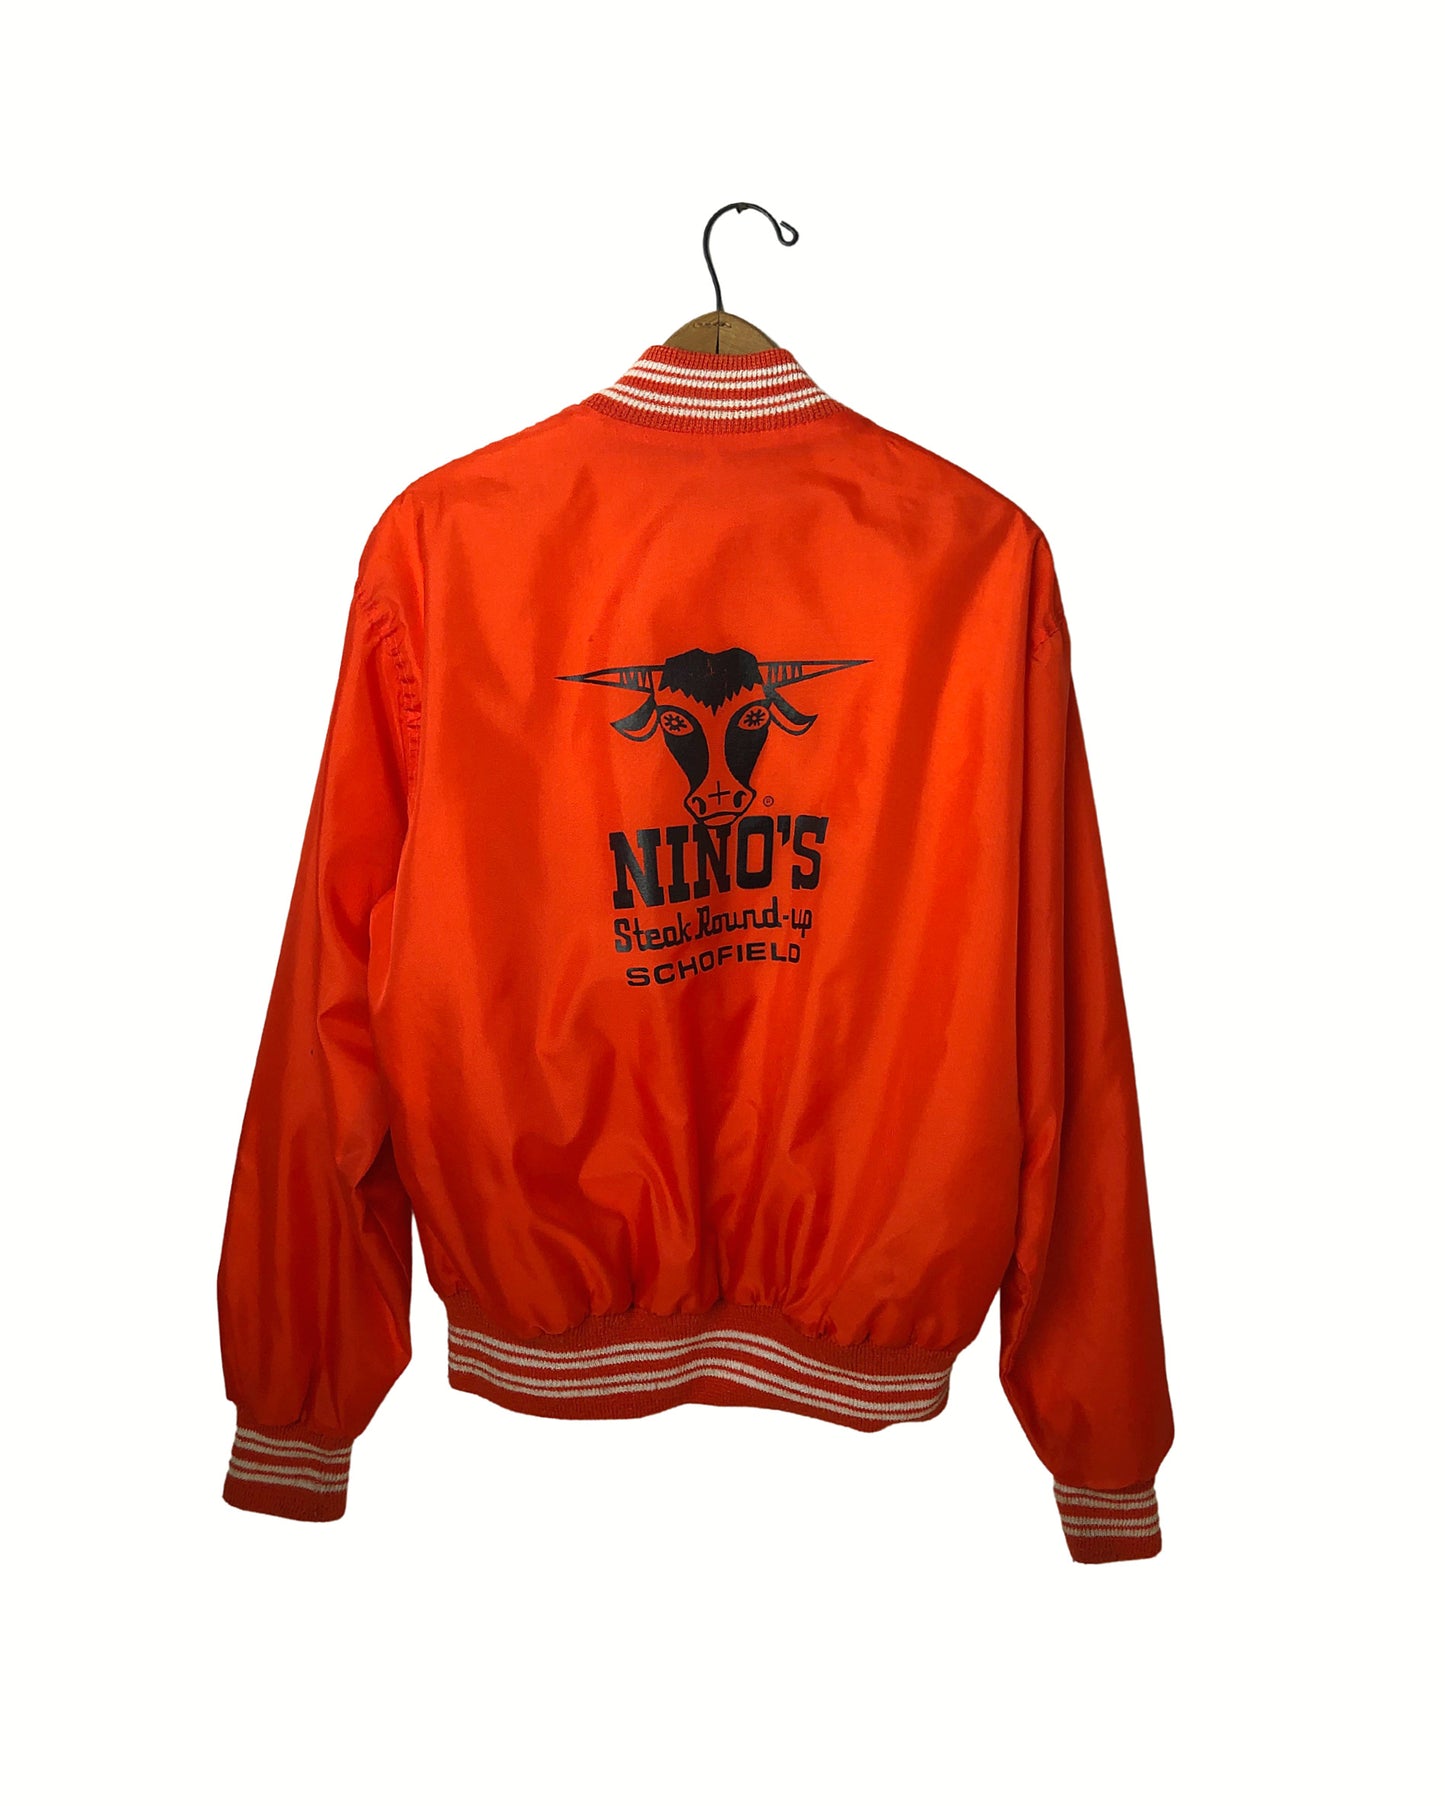 Vintage 70’s Nino’s Steak Roundup Schofield, Wisconsin Retro Orange Bomber Jacket